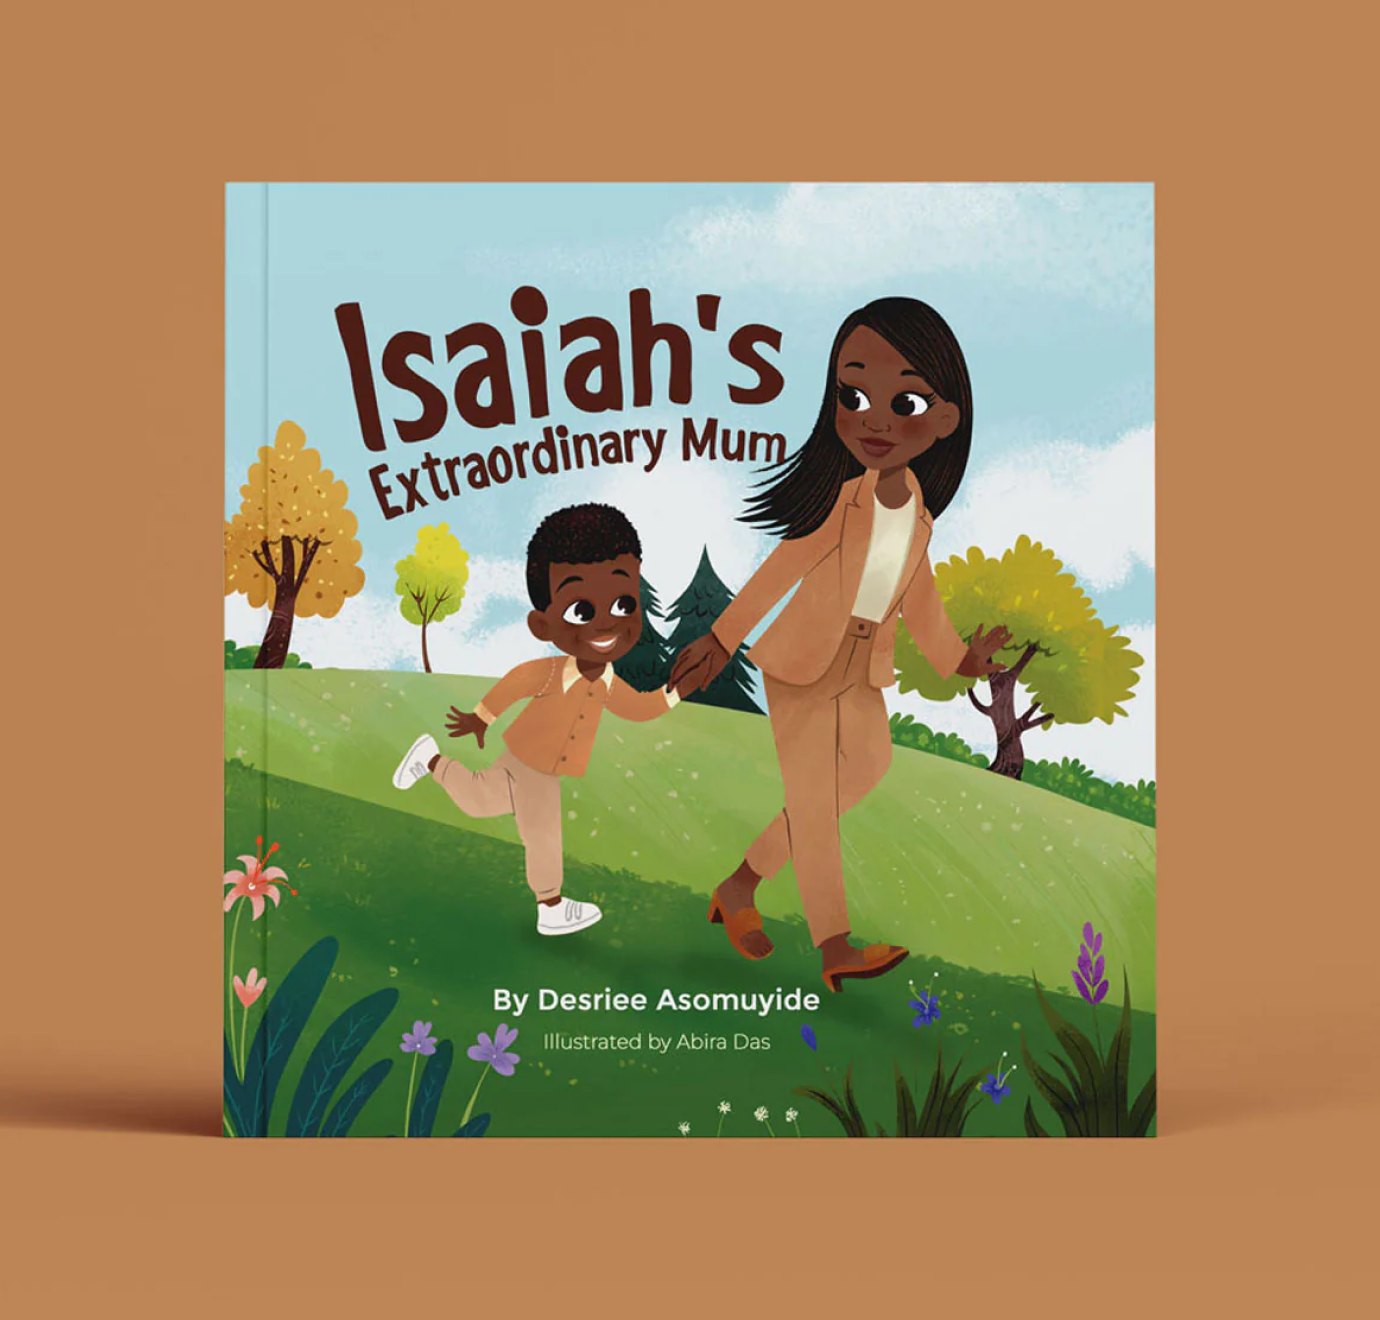 Book cover of 'Isaiah's Extraordinary Mum'